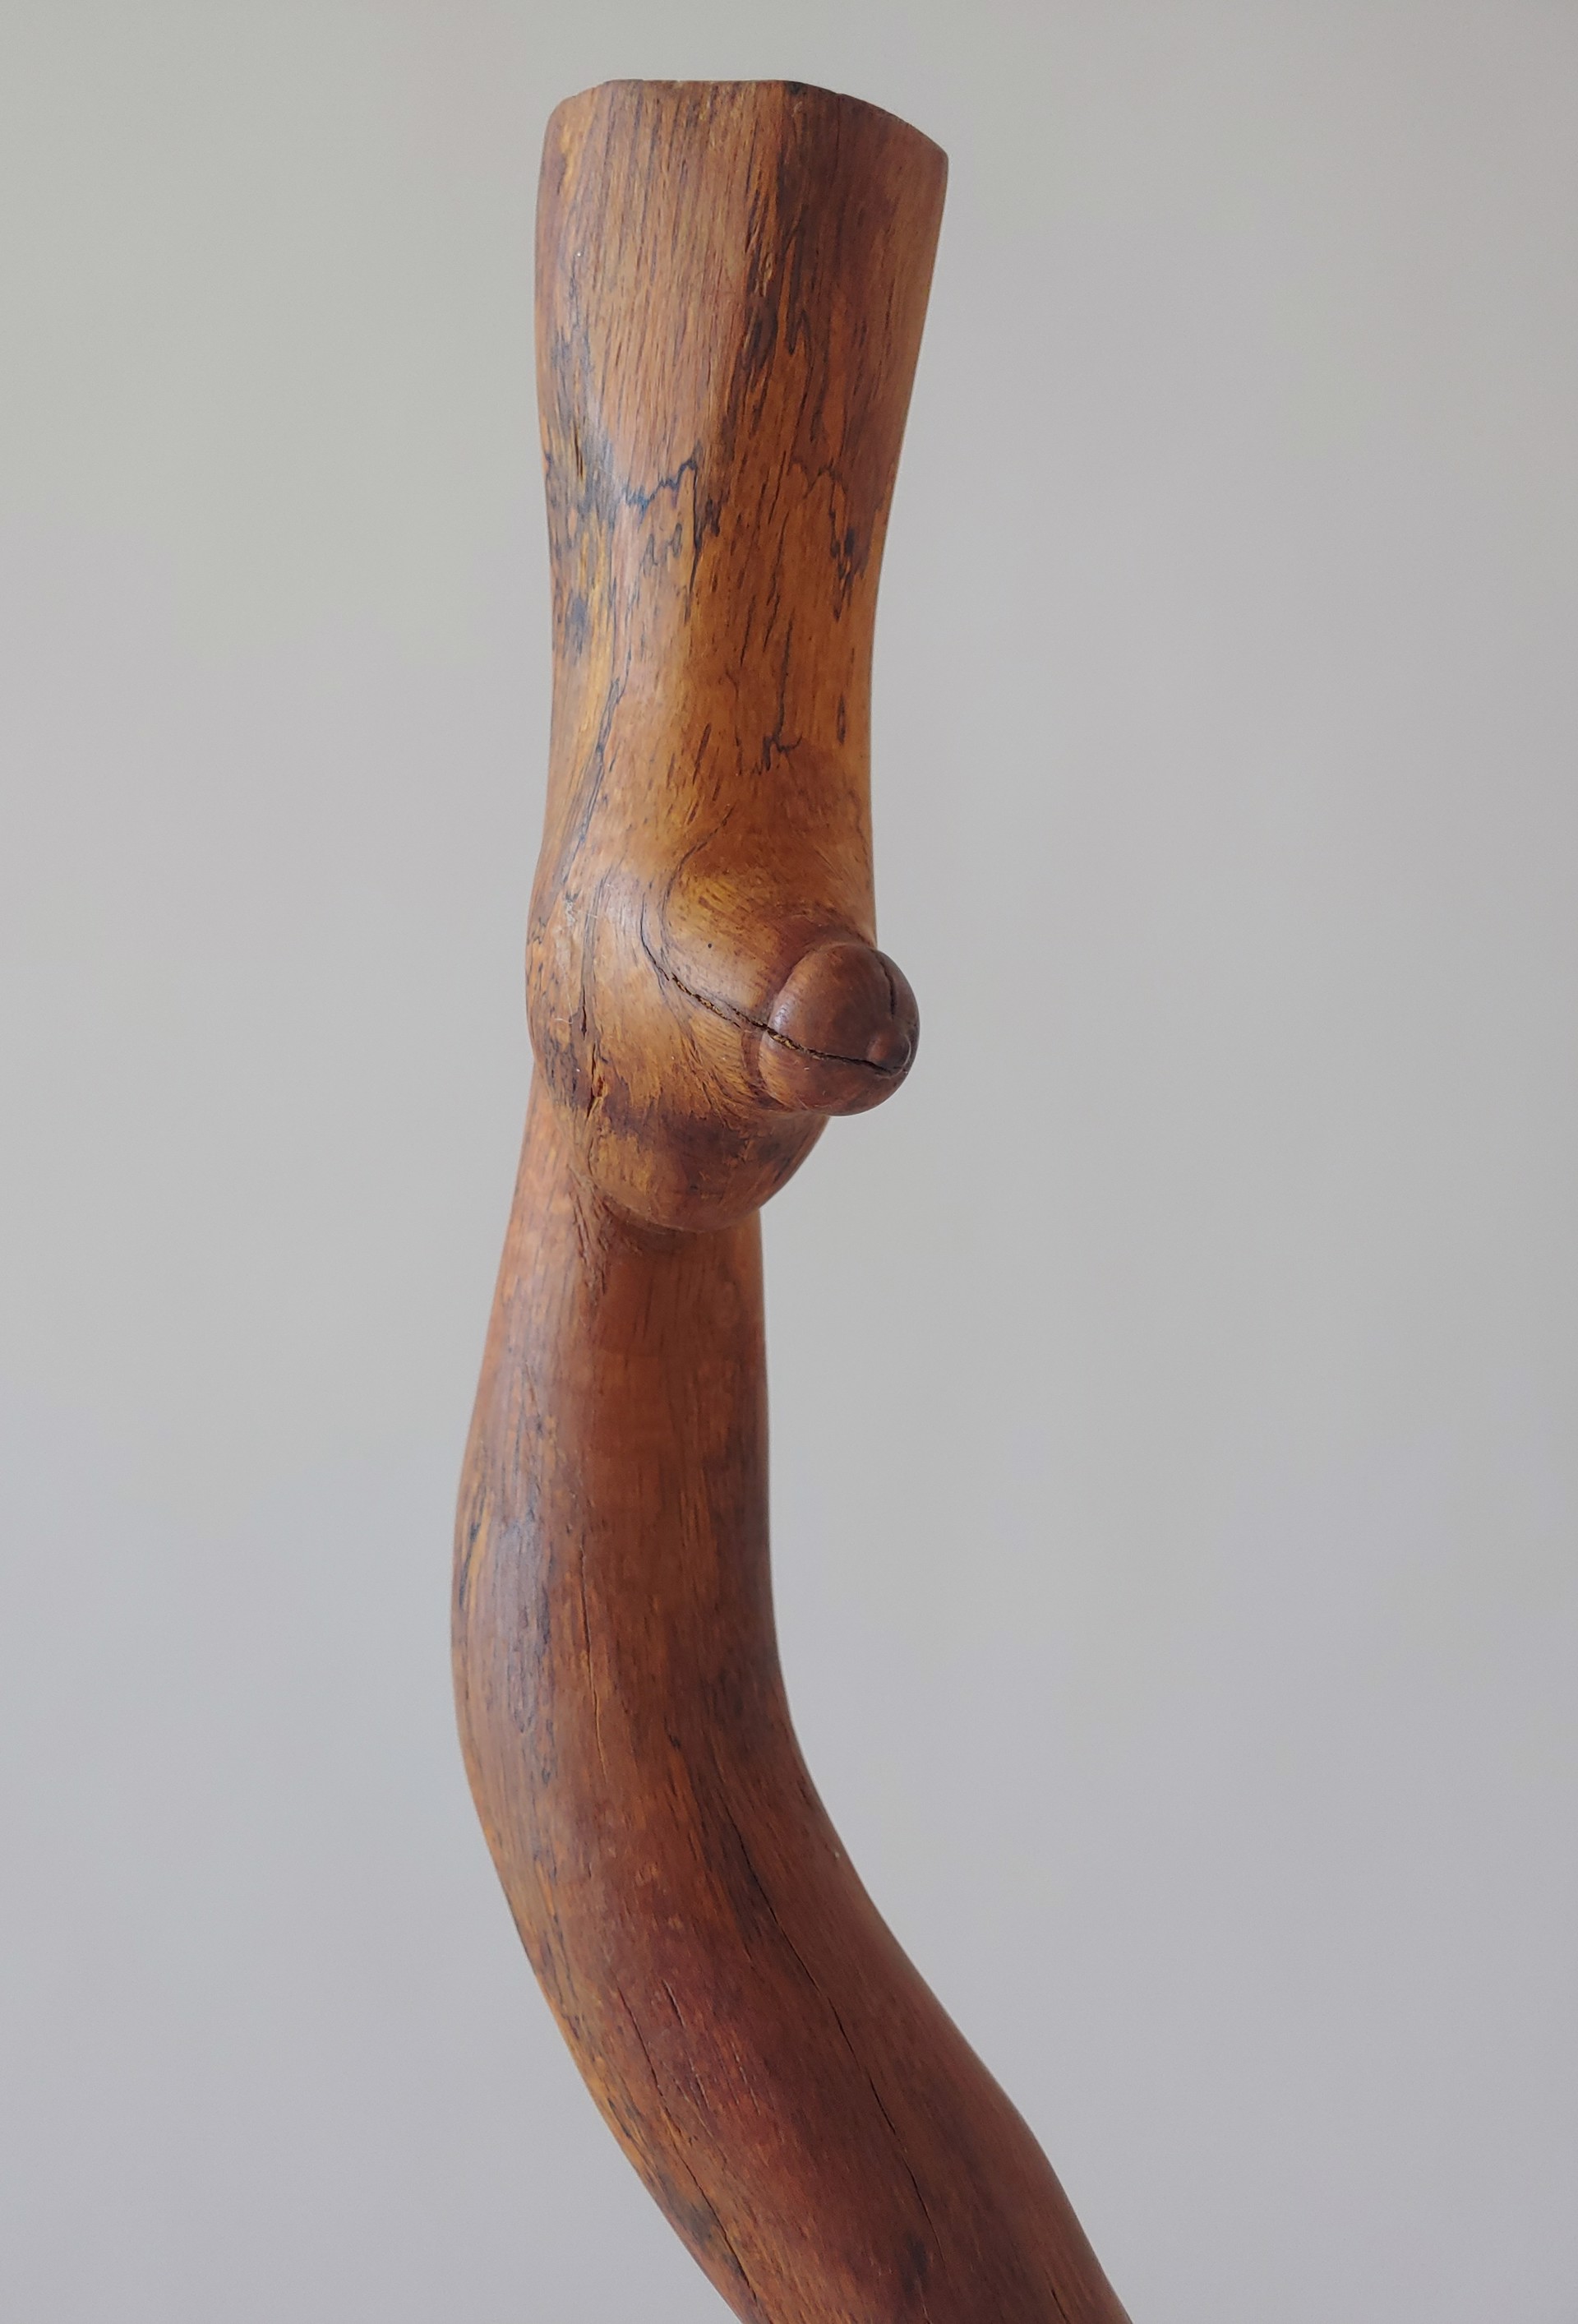 Acorn - Wood Sculpture by David Amdur